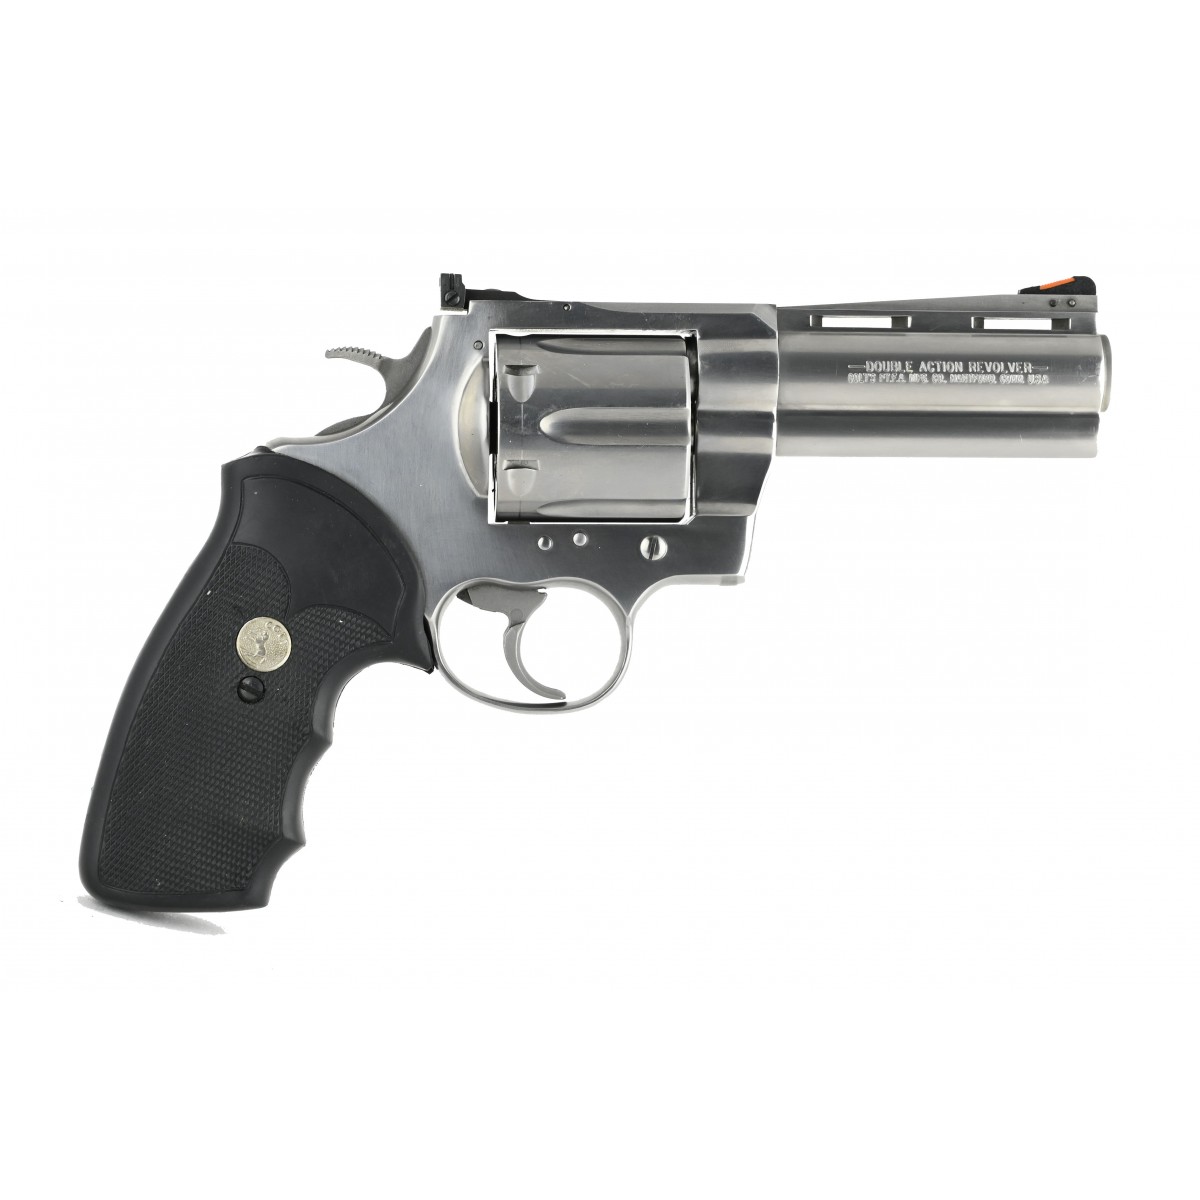 Colt Anaconda .44 Magnum caliber revolver for sale.